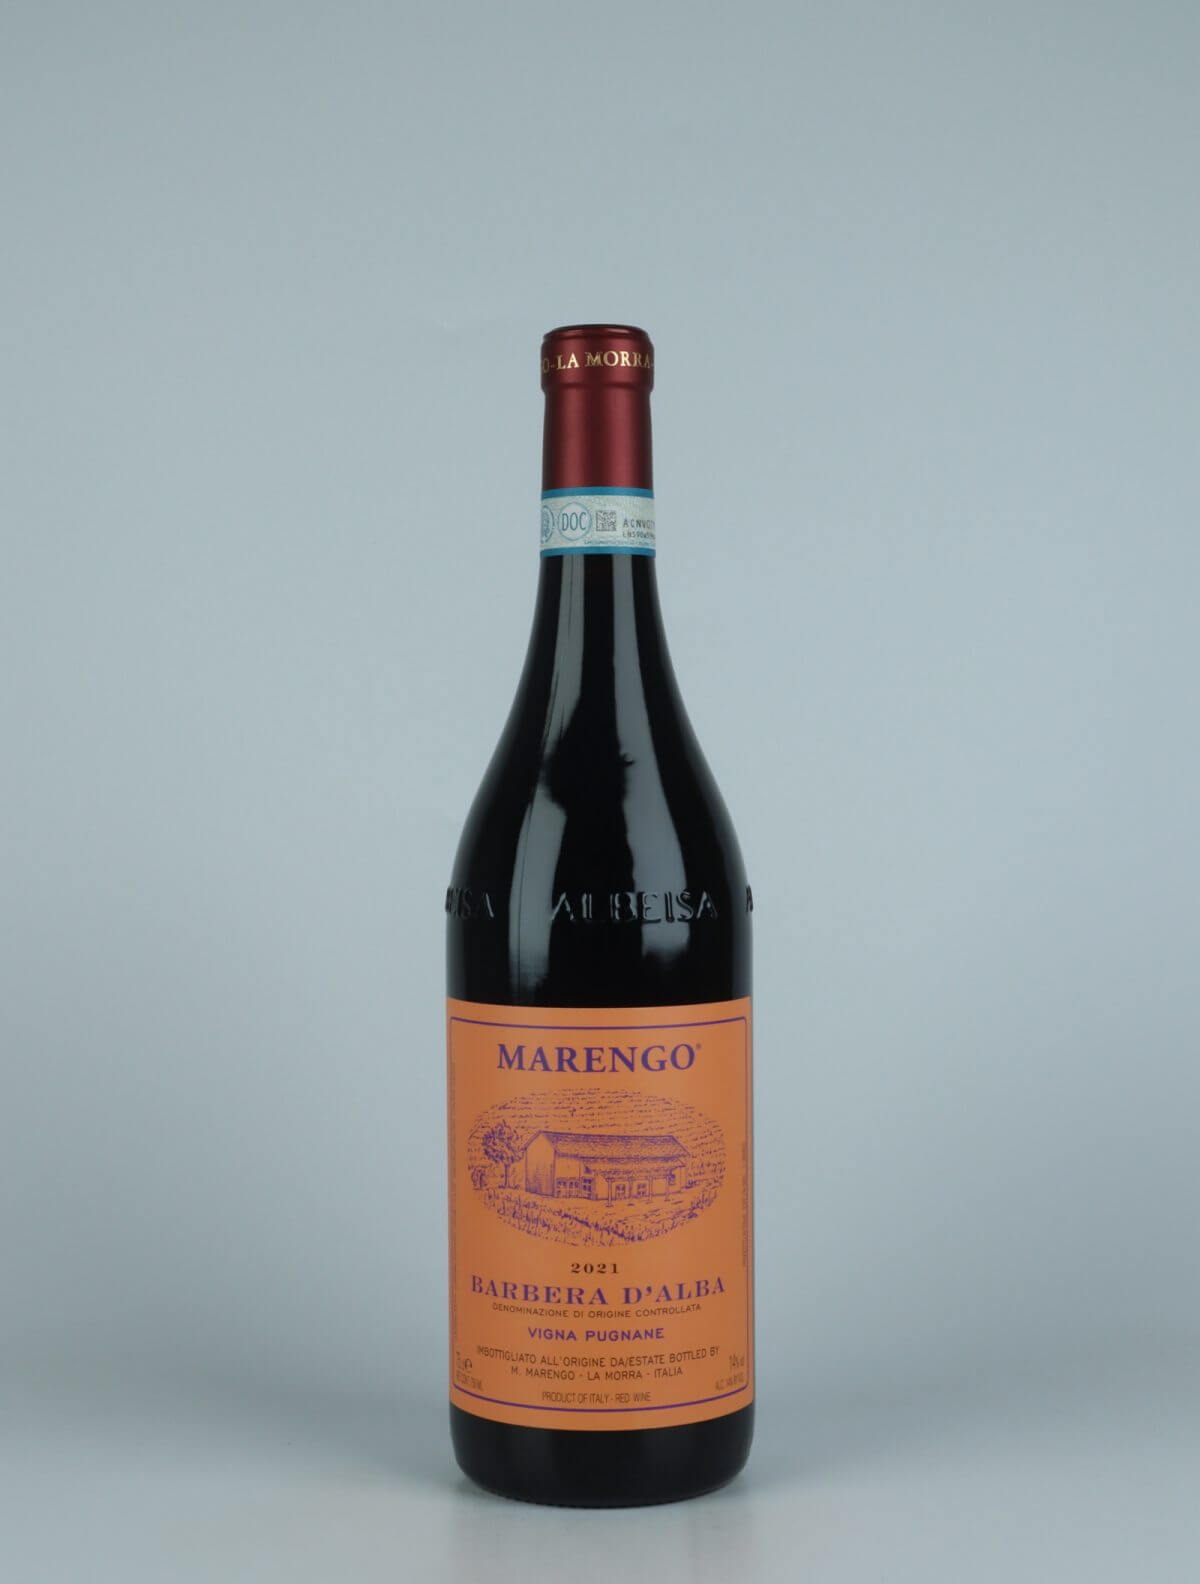 En flaske 2021 Barbera d'Alba - Pugnane Rødvin fra Mario Marengo, Piemonte i Italien